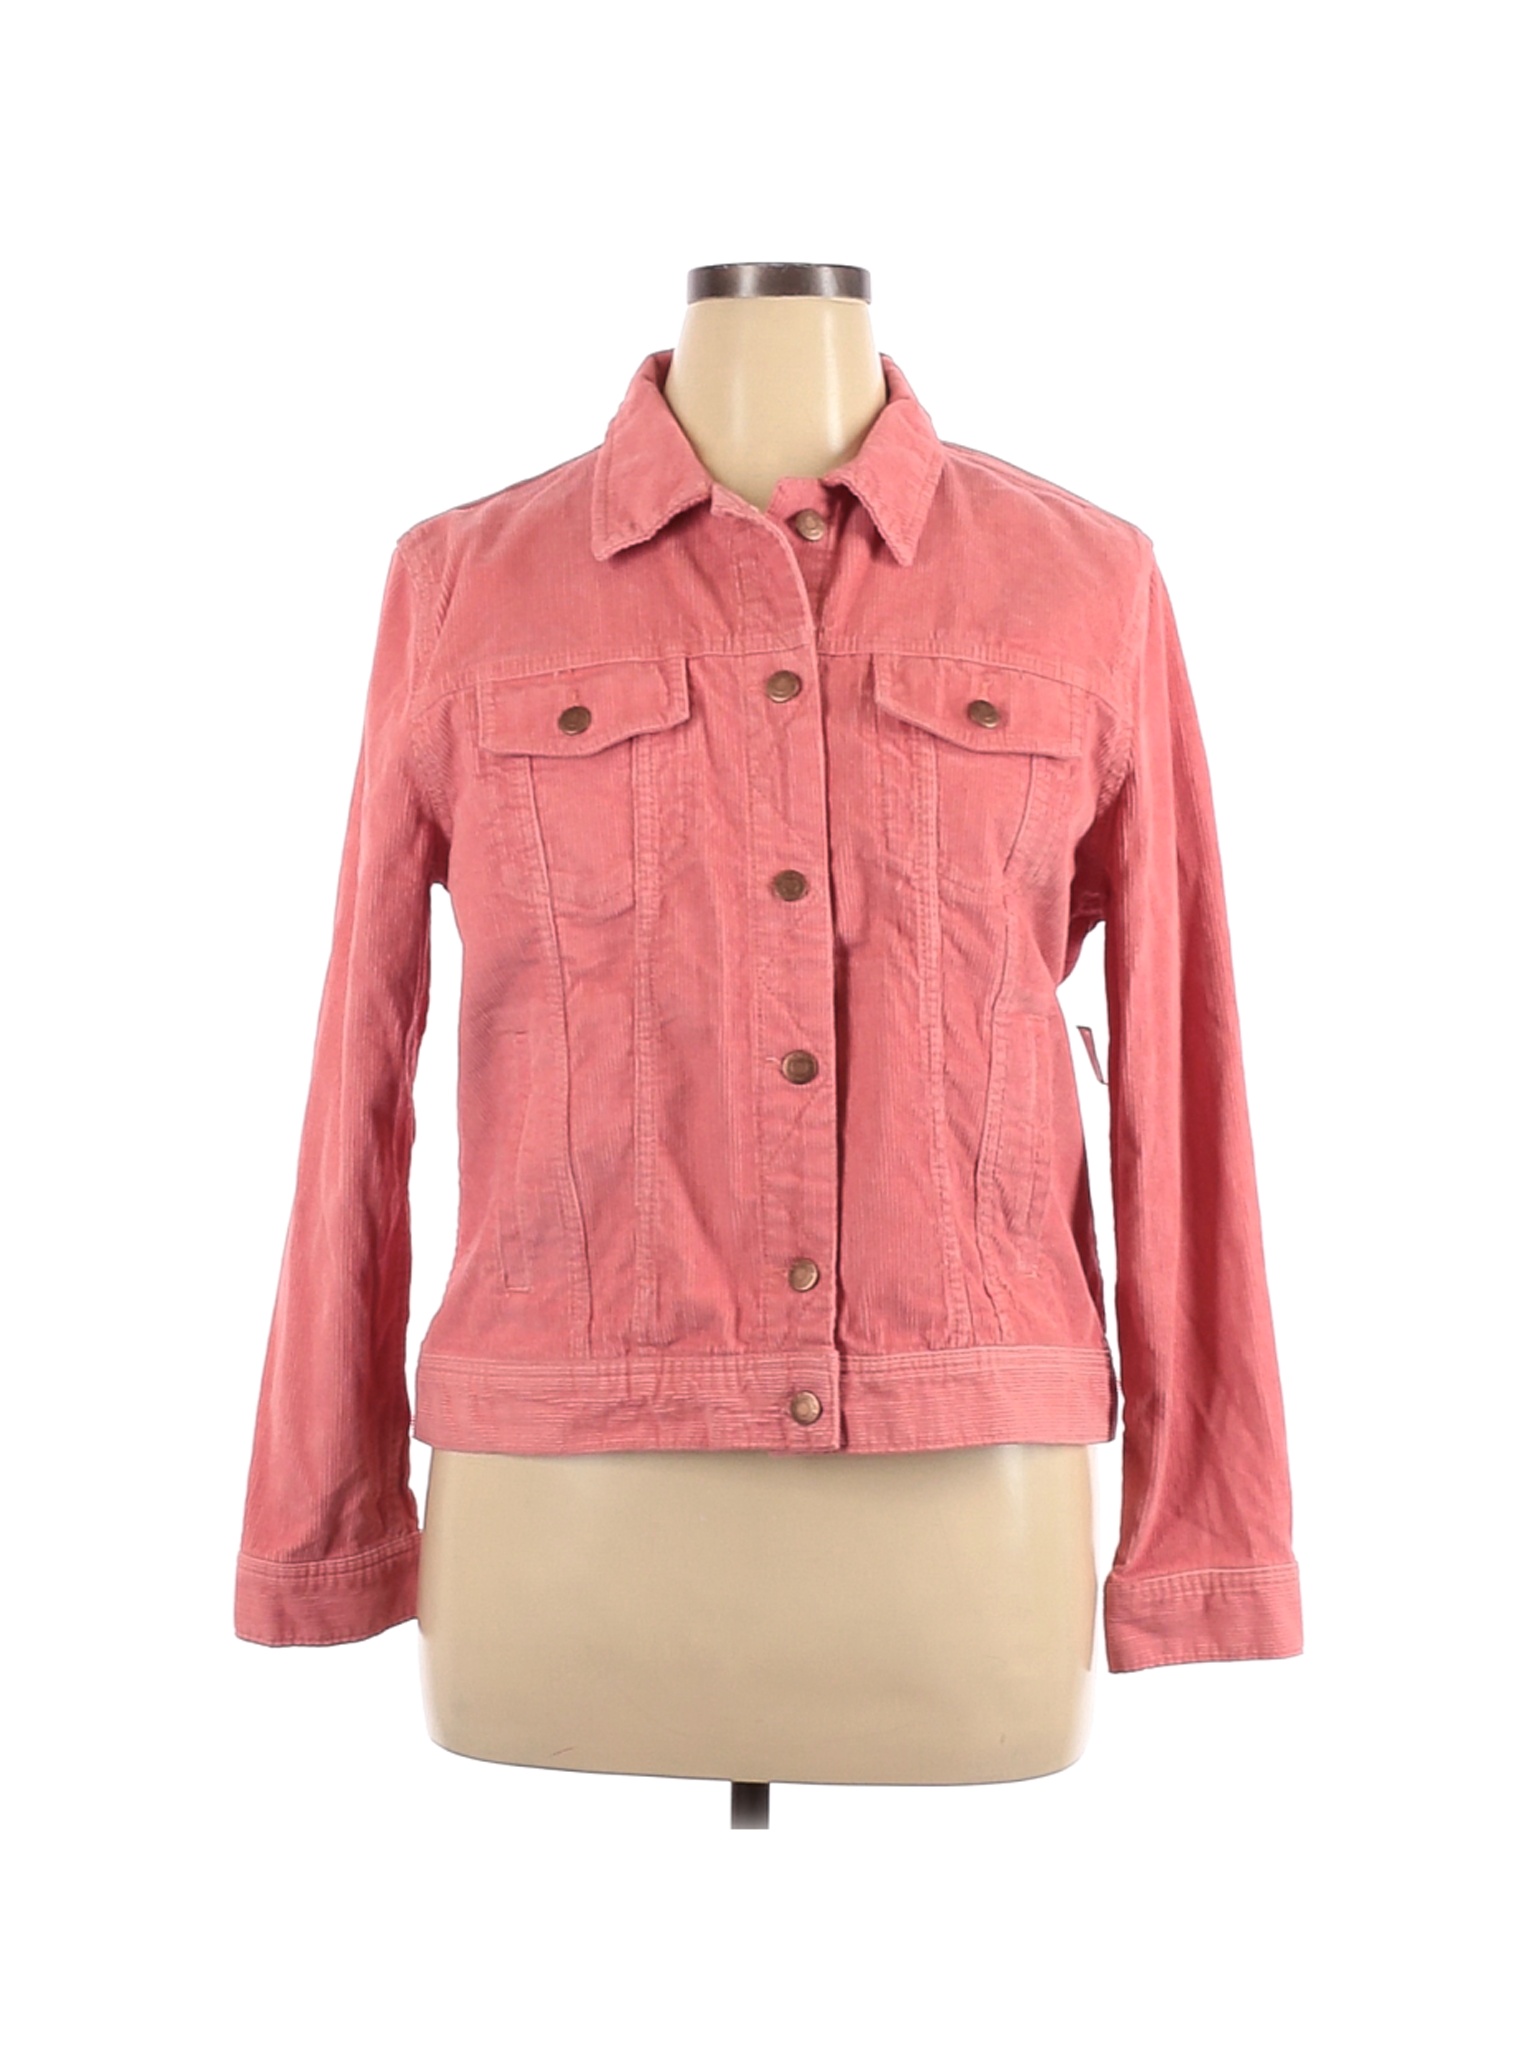 NWT Old Navy Women Pink Jacket XL | eBay